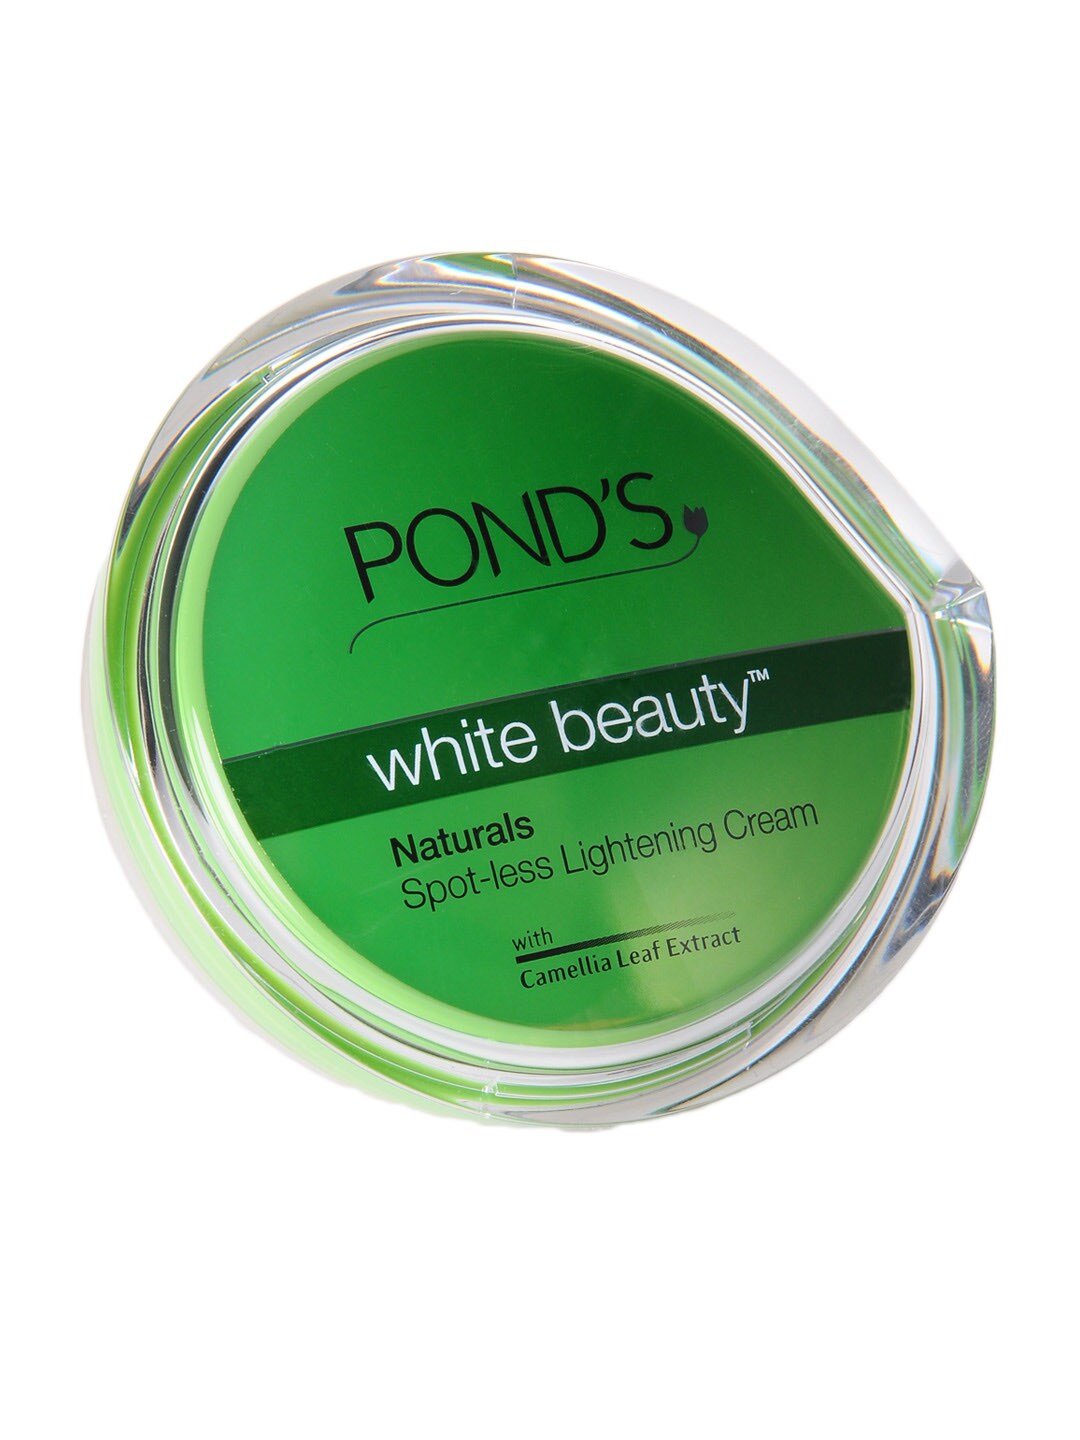 Pond's White Beauty Naturals Spot-Less Lightening Cream